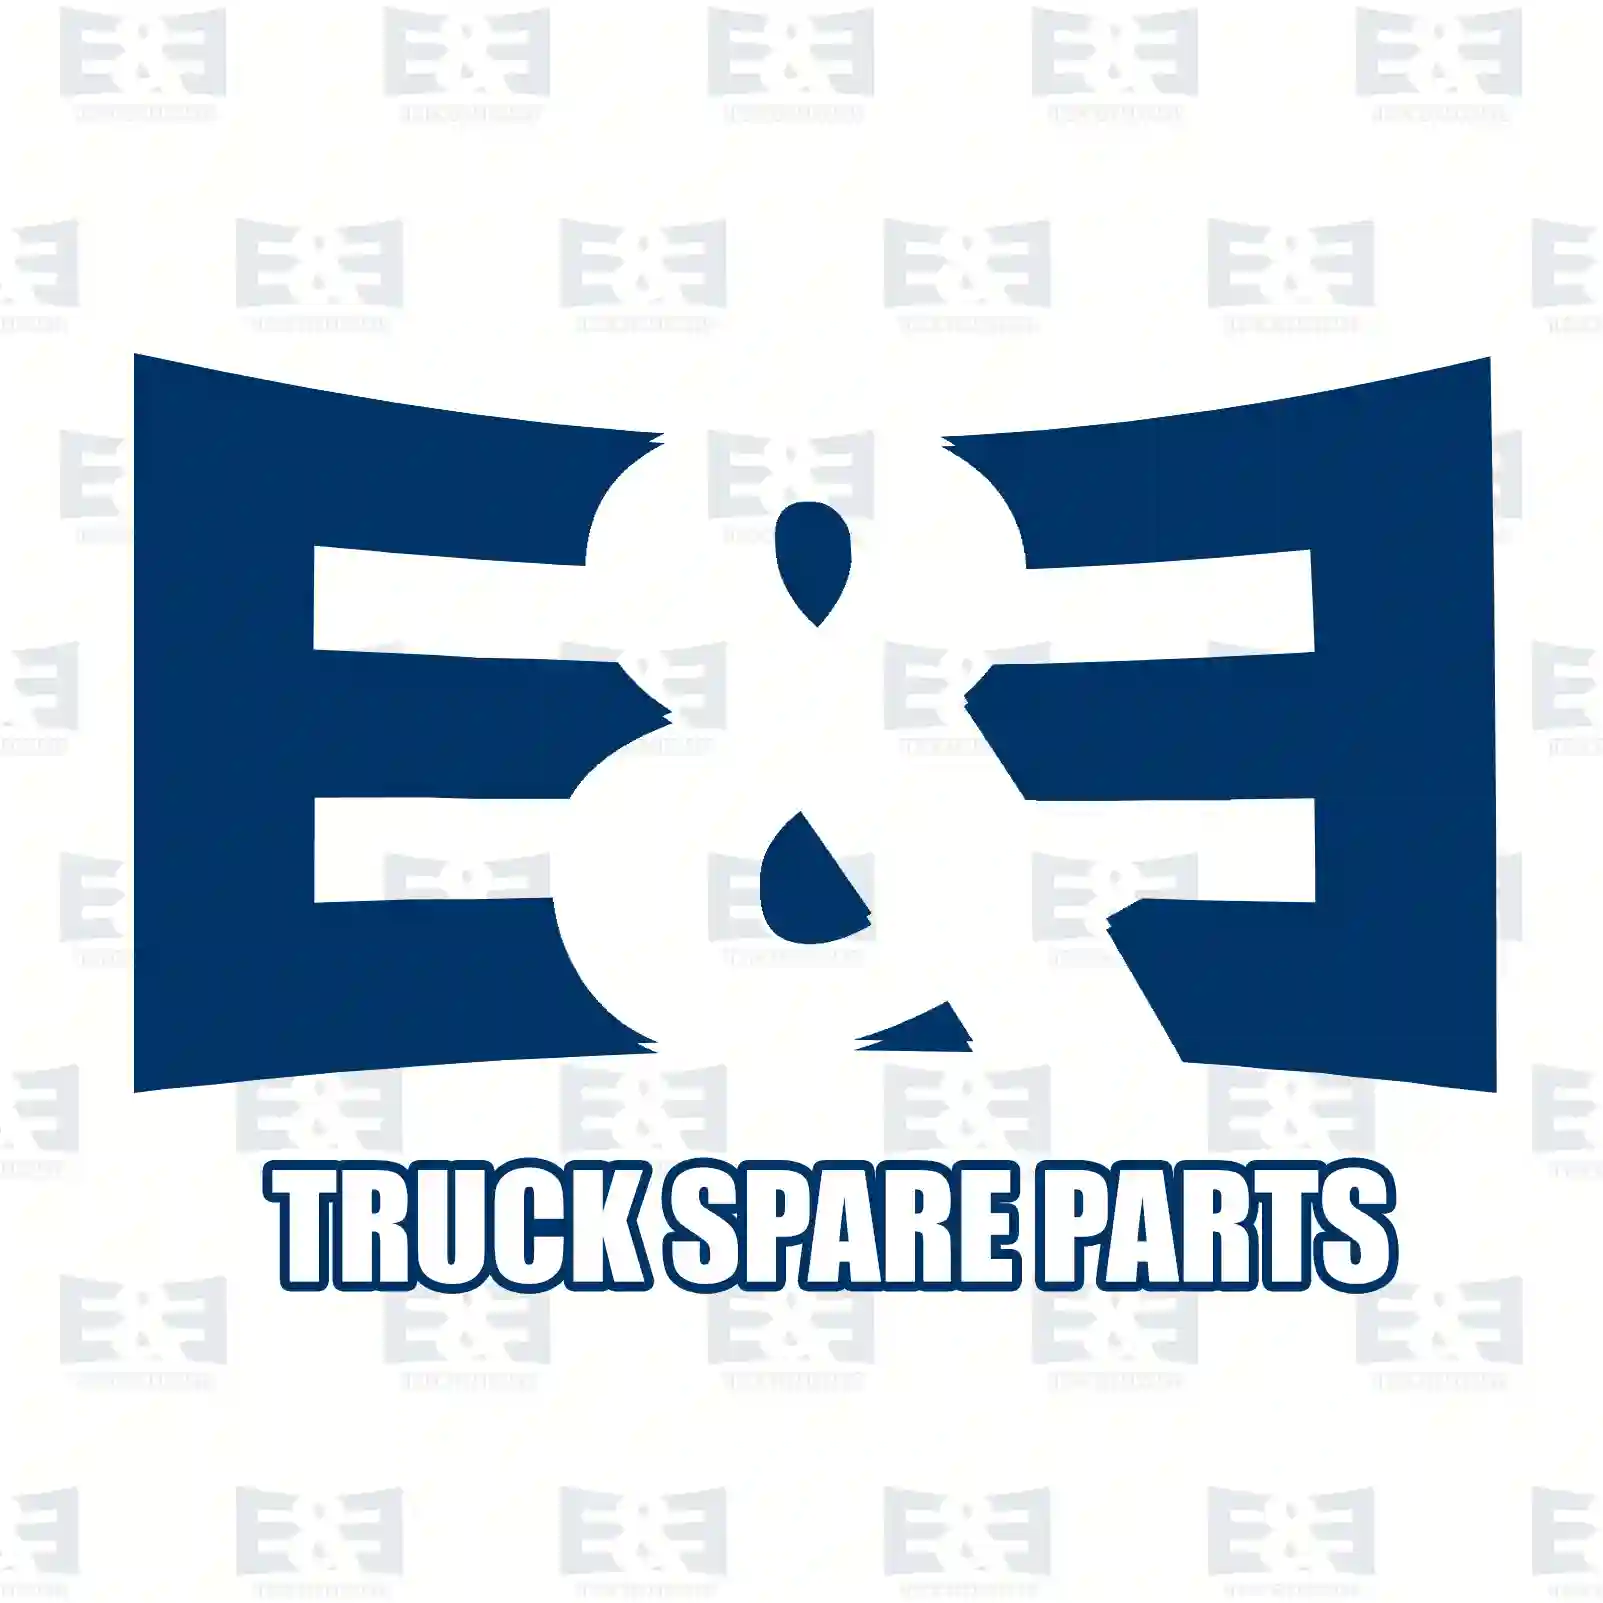 Ball joint, right hand thread, 2E2279262, 0009966845, 0009967045, 3759960045, ZG40144-0008 ||  2E2279262 E&E Truck Spare Parts | Truck Spare Parts, Auotomotive Spare Parts Ball joint, right hand thread, 2E2279262, 0009966845, 0009967045, 3759960045, ZG40144-0008 ||  2E2279262 E&E Truck Spare Parts | Truck Spare Parts, Auotomotive Spare Parts